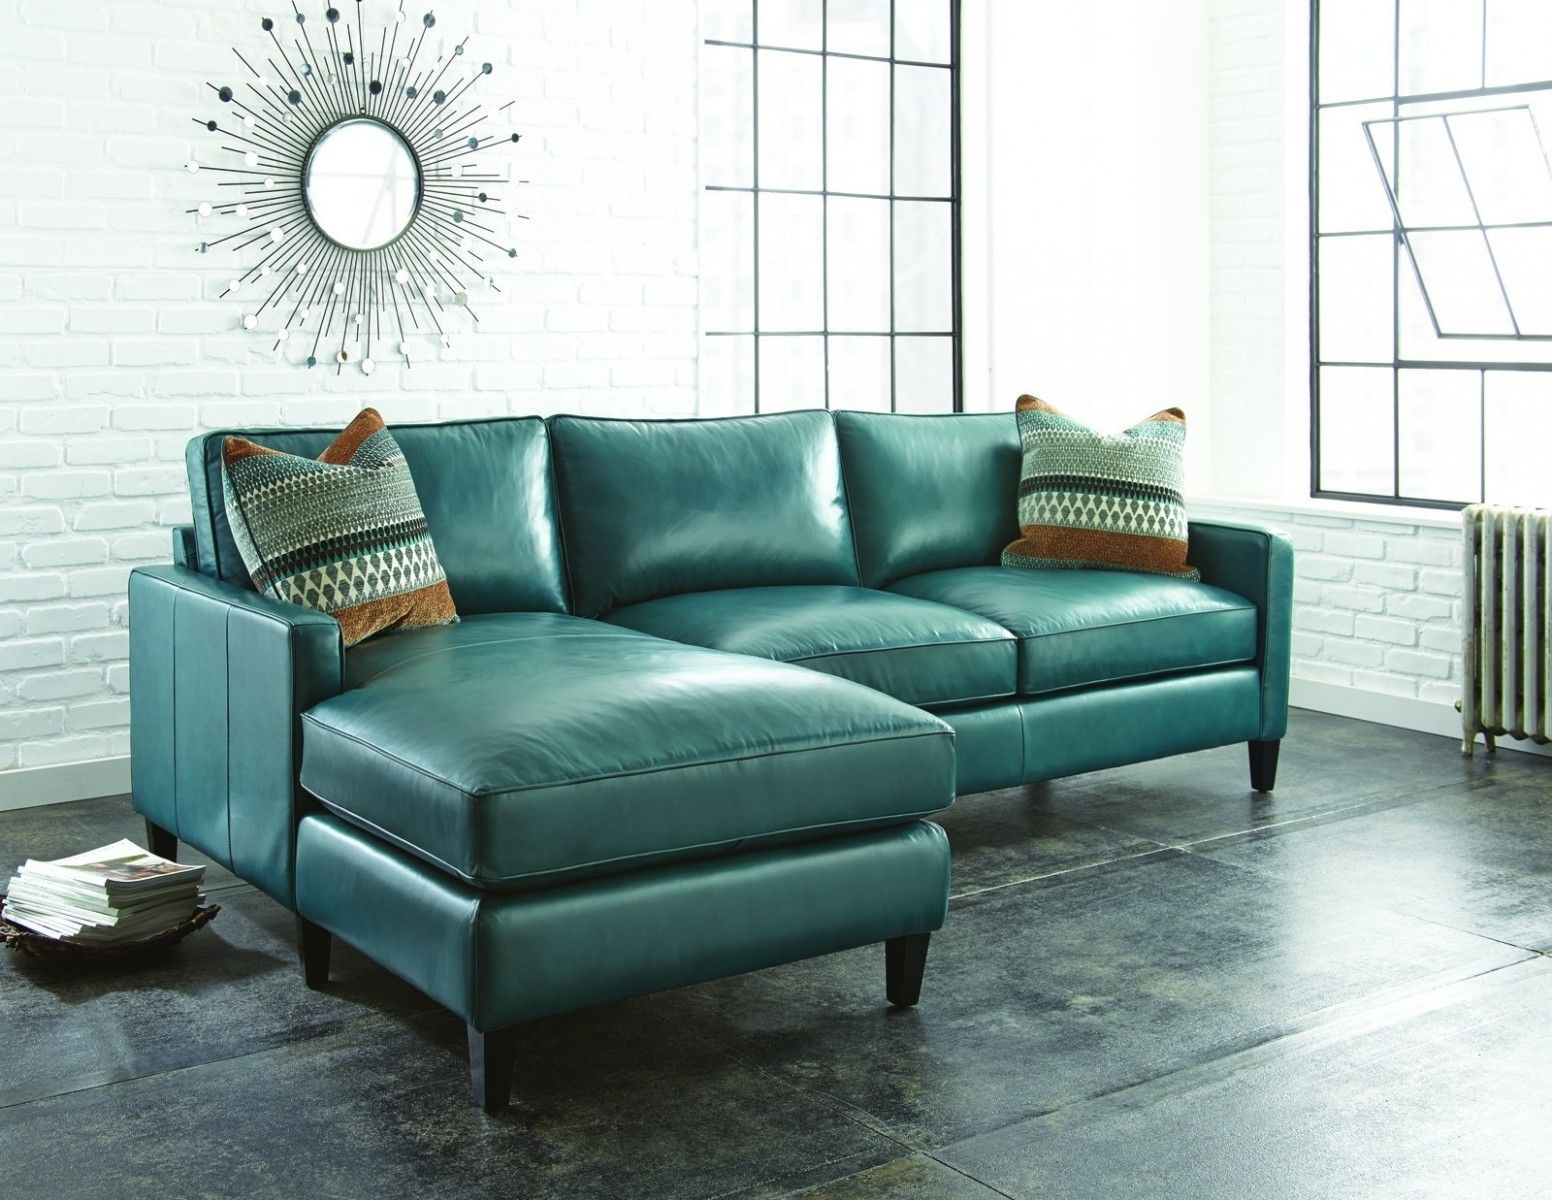 Aqua Couch Rust Rug Living Room